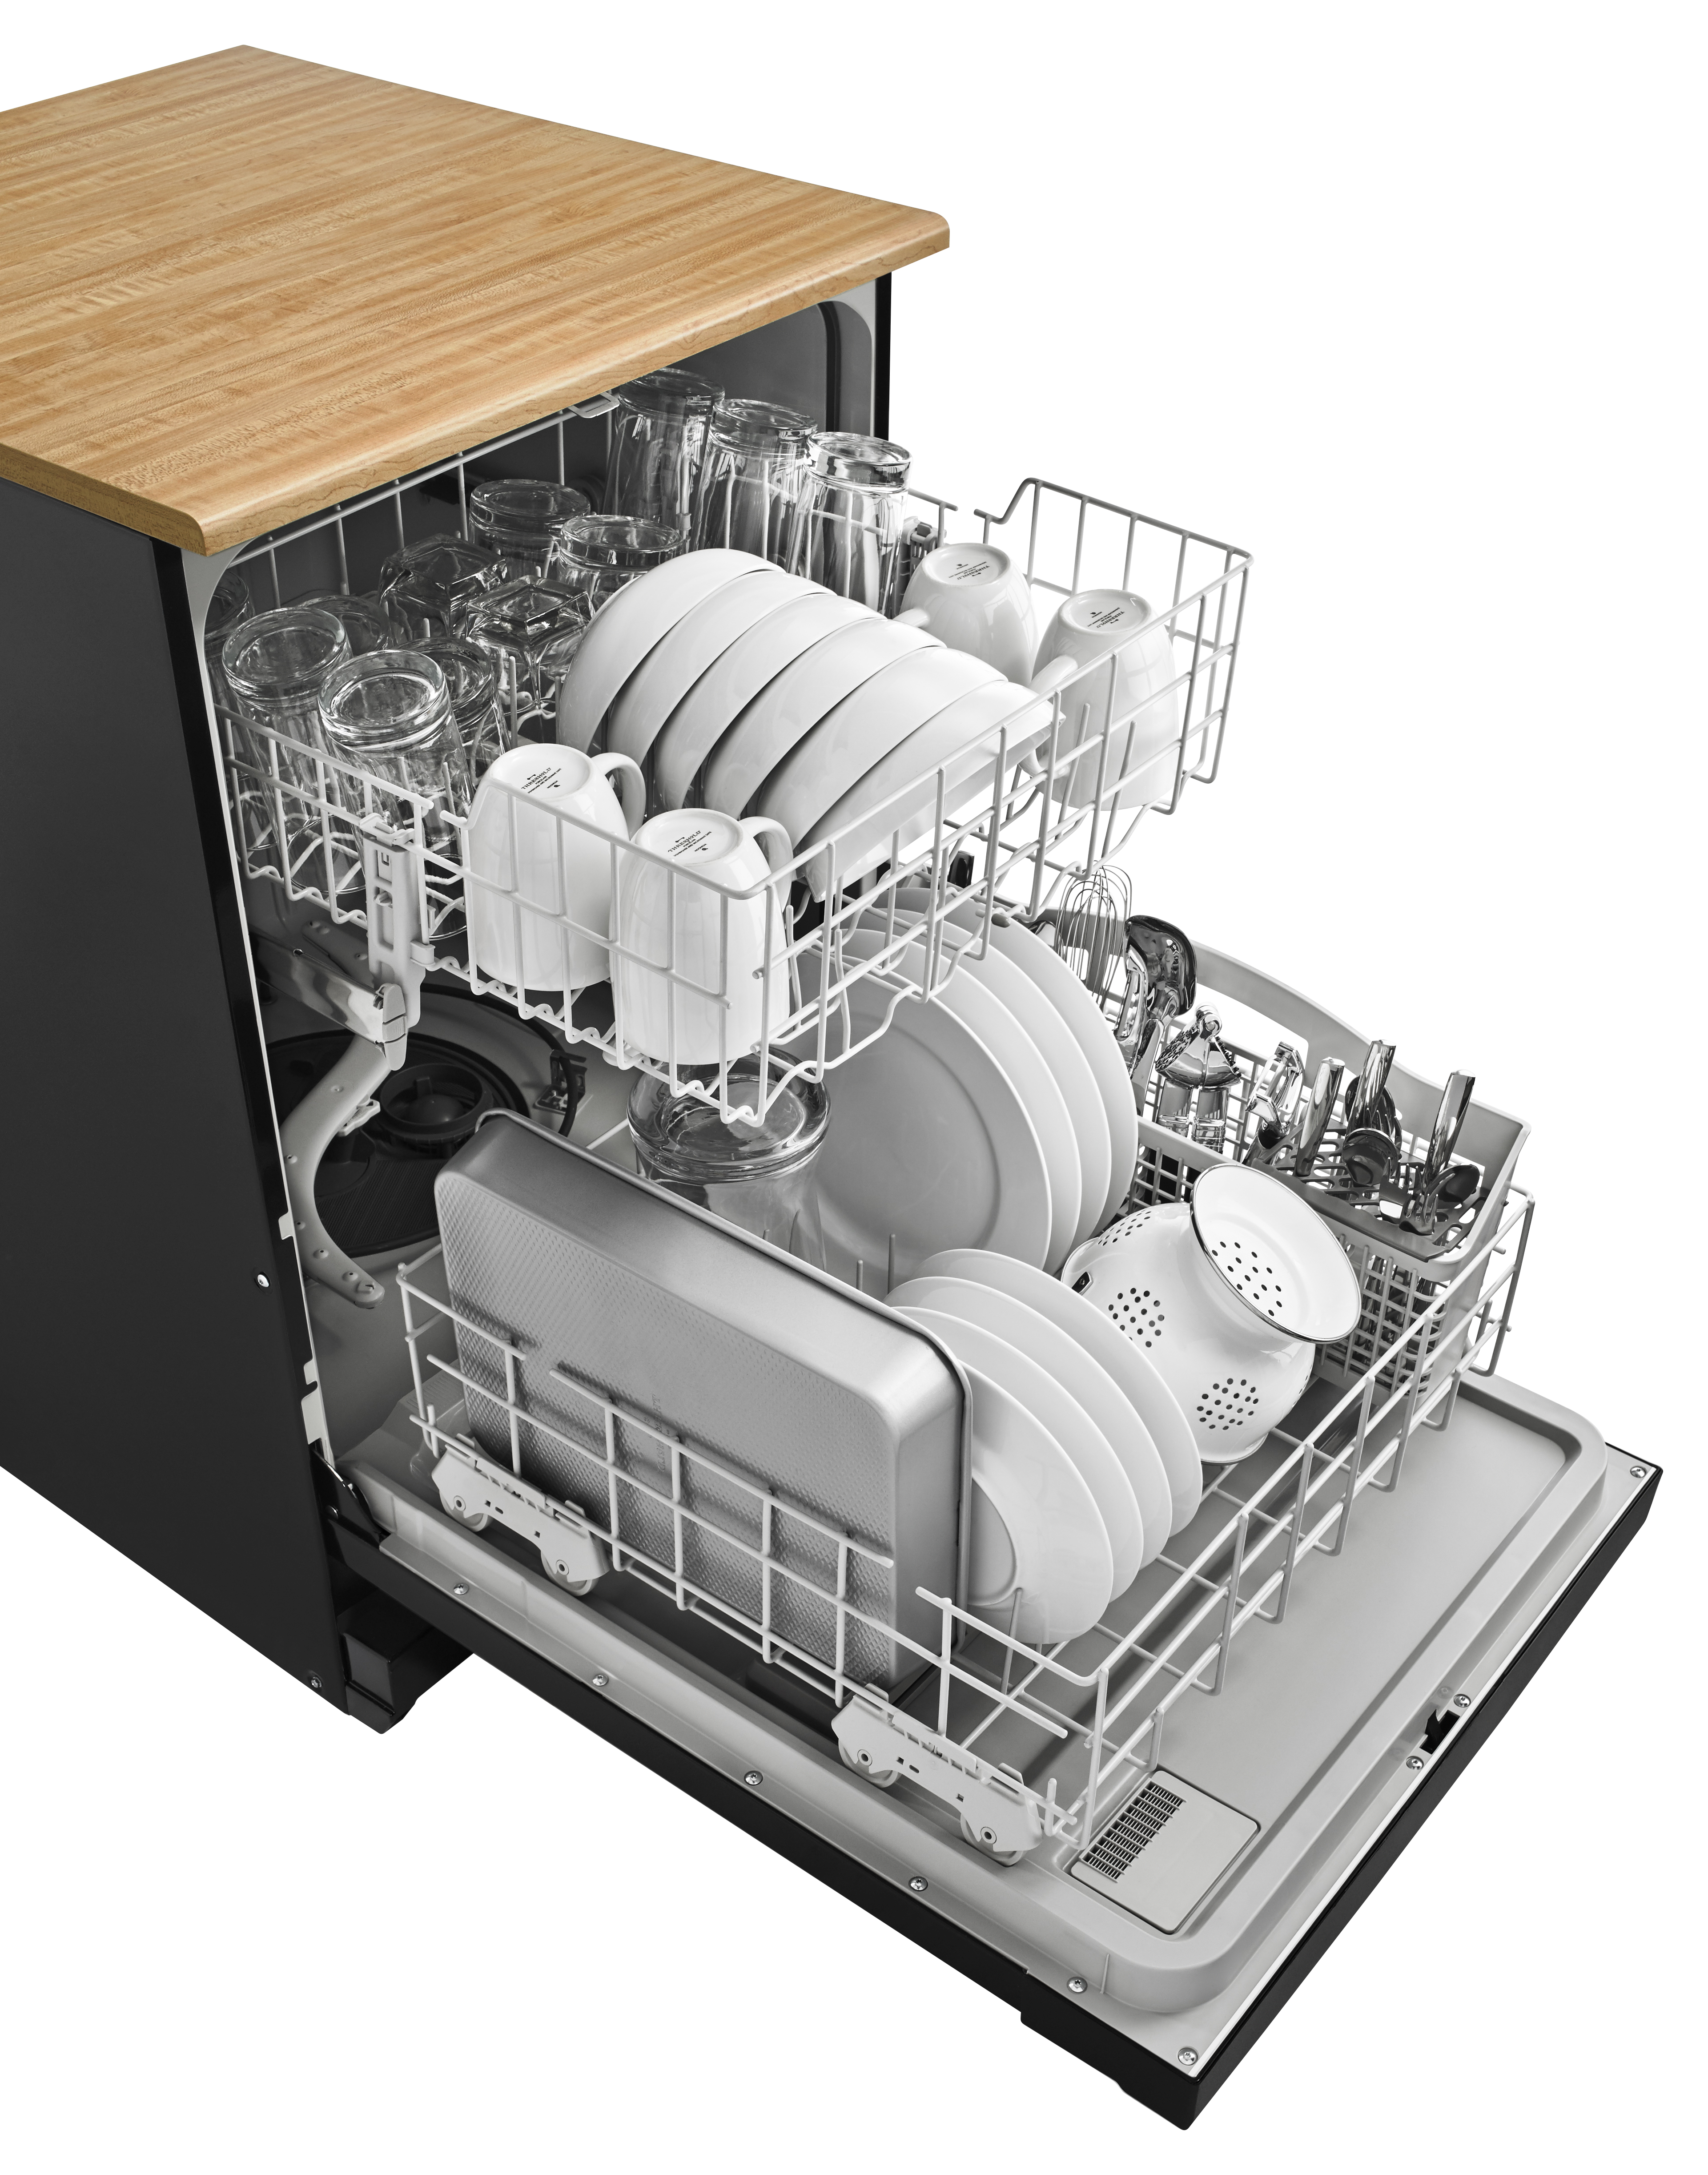 sears portable dishwasher